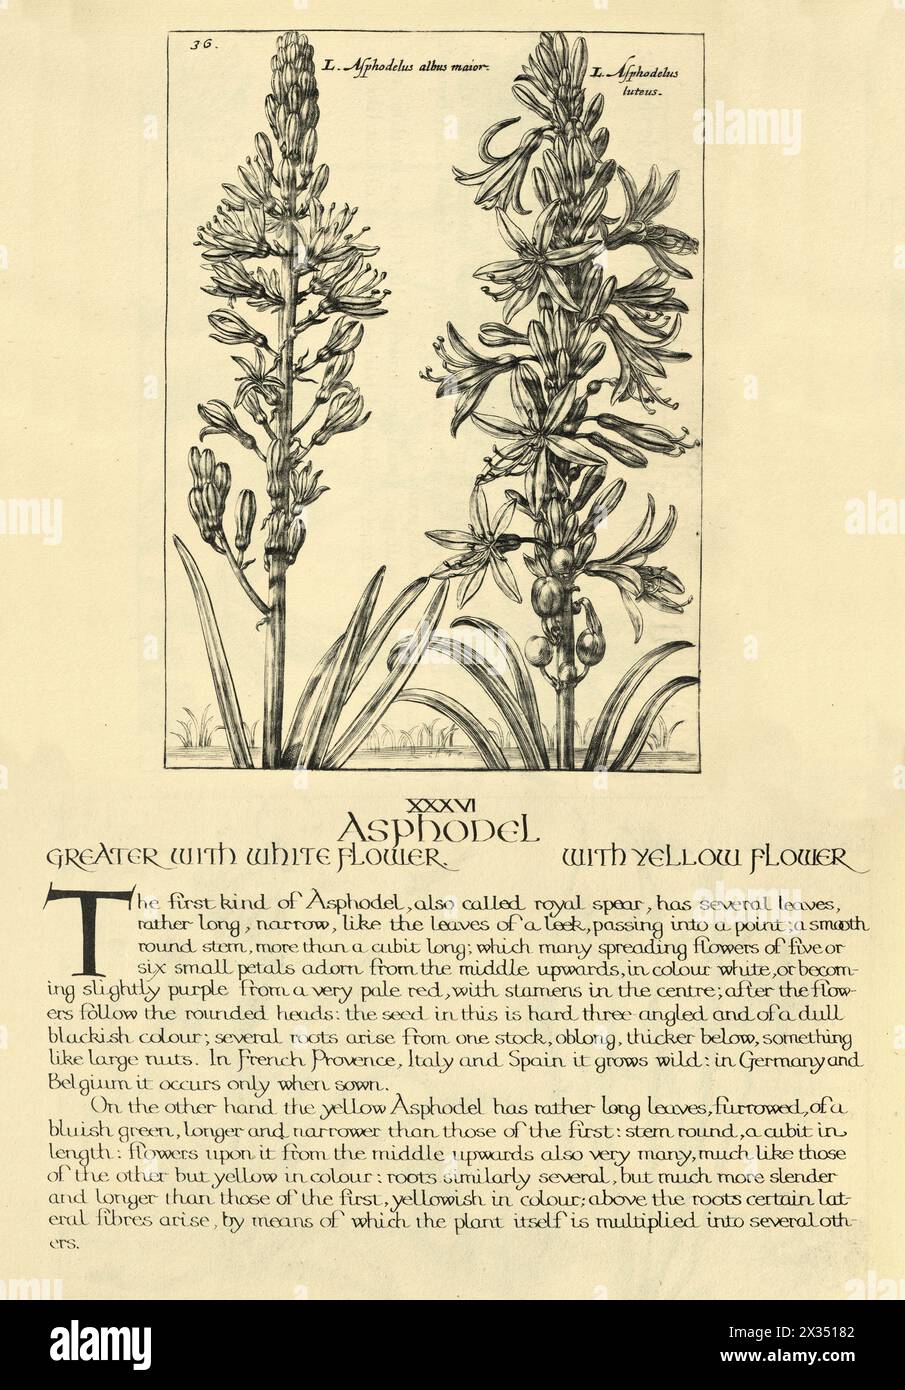 Botanical art print of Asphodel, Asphodelus, perennial flowering plant, from Hortus Floridus by Crispin de Passe, Vintage illustration, 17th Century Stock Photo